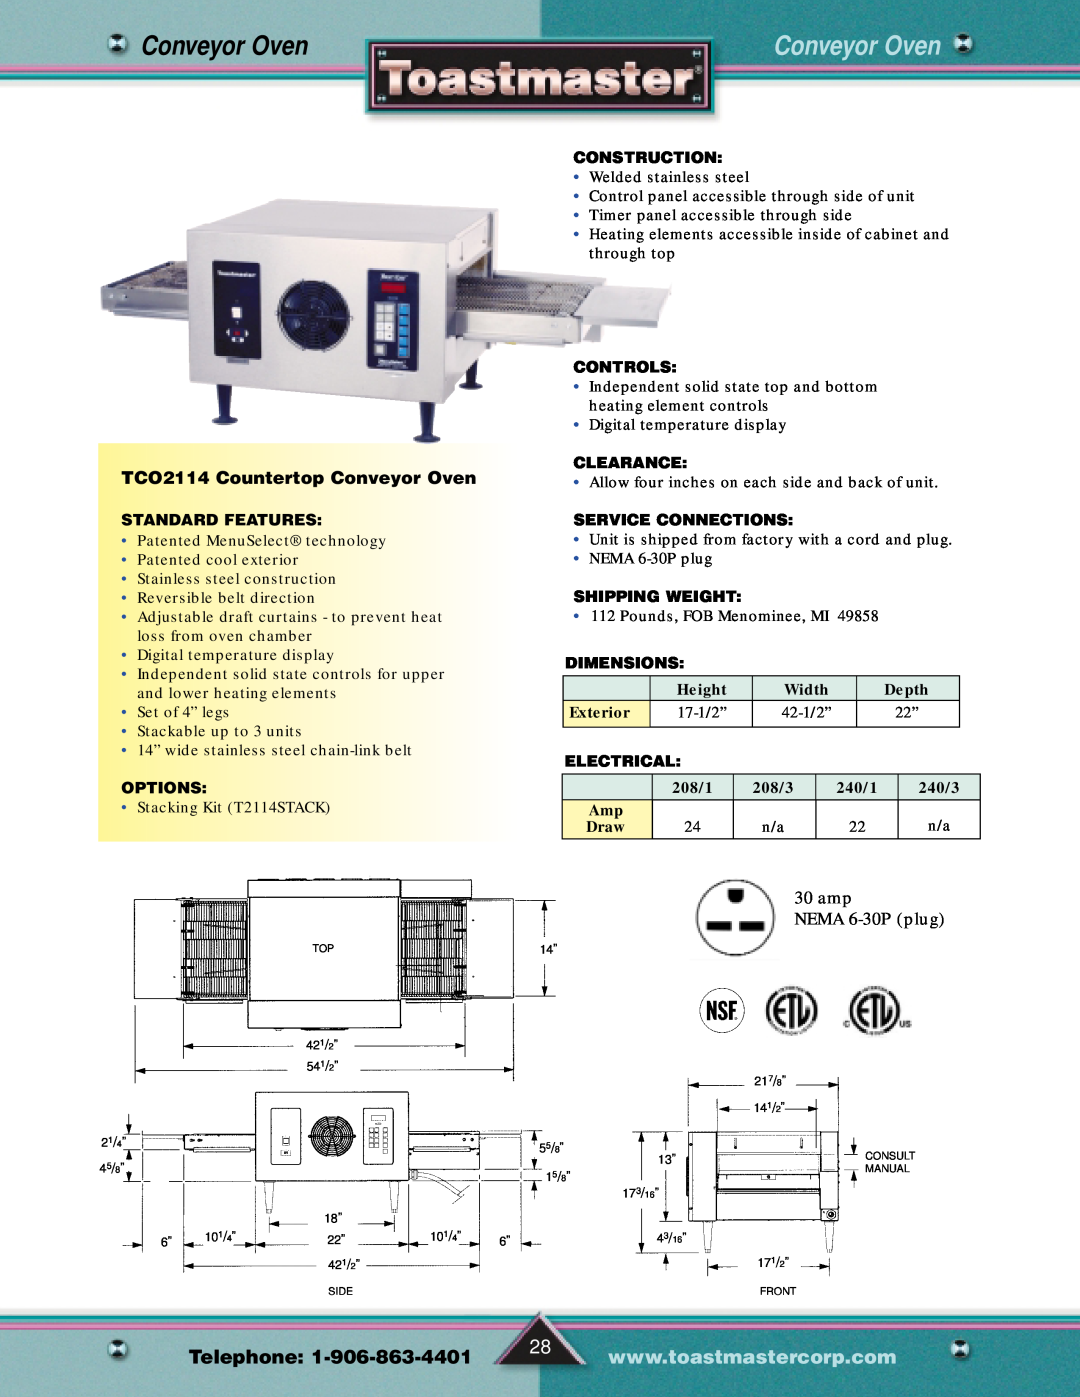 Toastmaster Gas & Electric Fryer manual TCO2114 Countertop Conveyor Oven, Telephone, amp NEMA 6-30P plug 